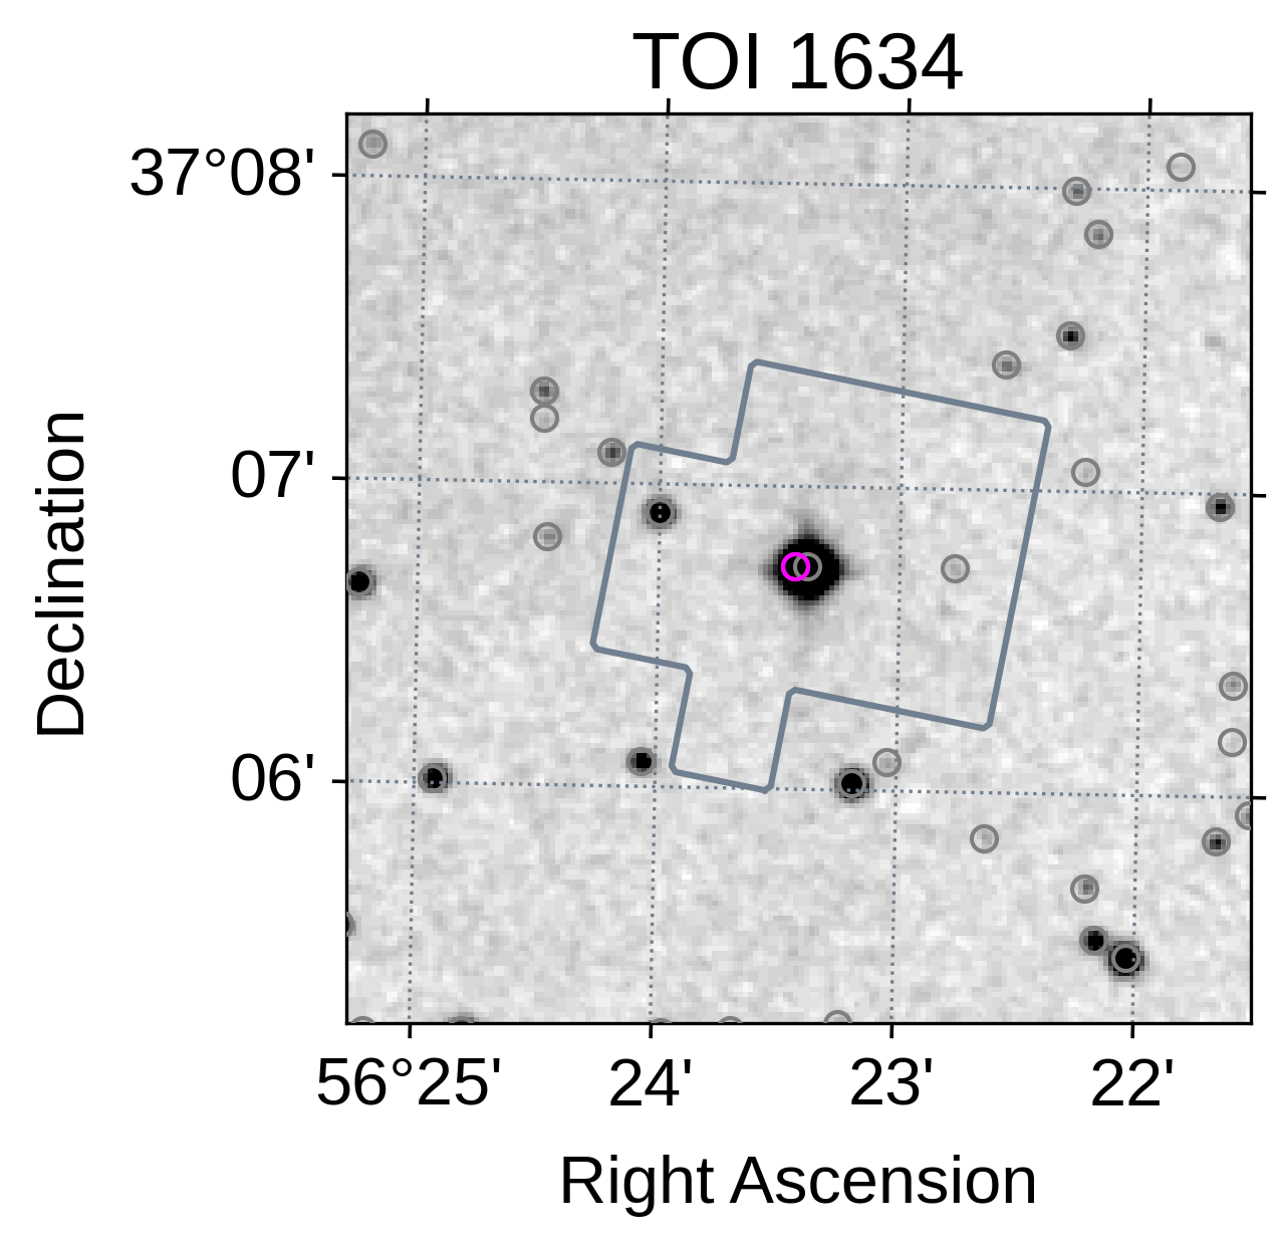 Зоря TOI-1634 у даних TESS. Teruyuki Hirano et al. / The Astronomical Journal, 2021